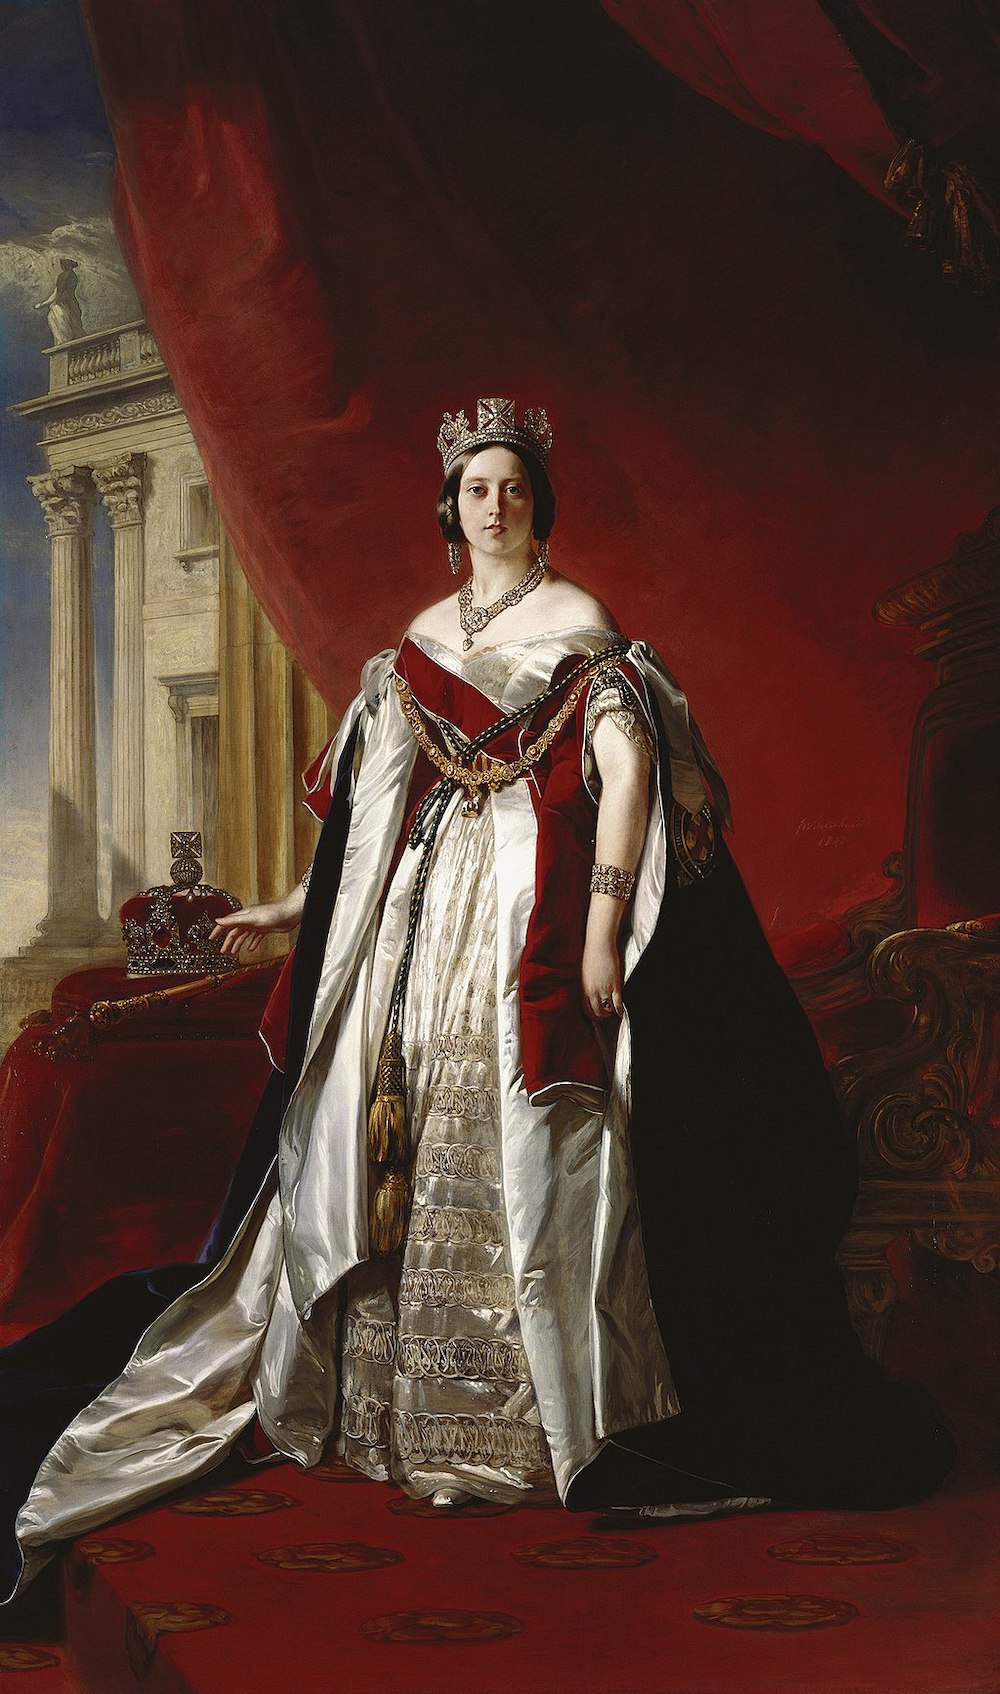 British Monarchs: Queen Victoria painting by Franz Xaver Winterhalter, 1843. Photo Credit: © Public Domain via Wikimedia Commons.